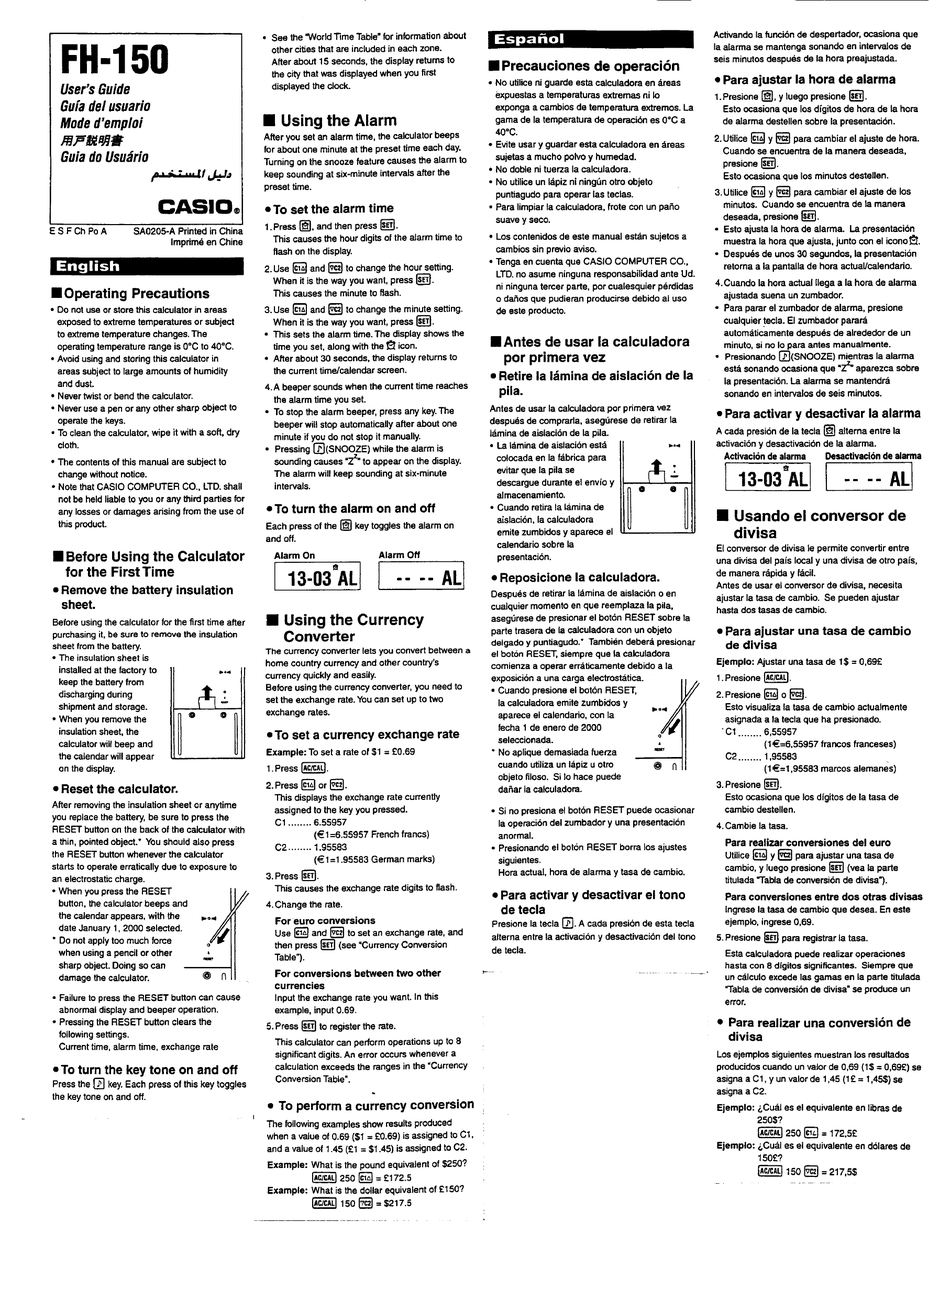 CASIO FH-150 USER MANUAL Pdf Download | ManualsLib